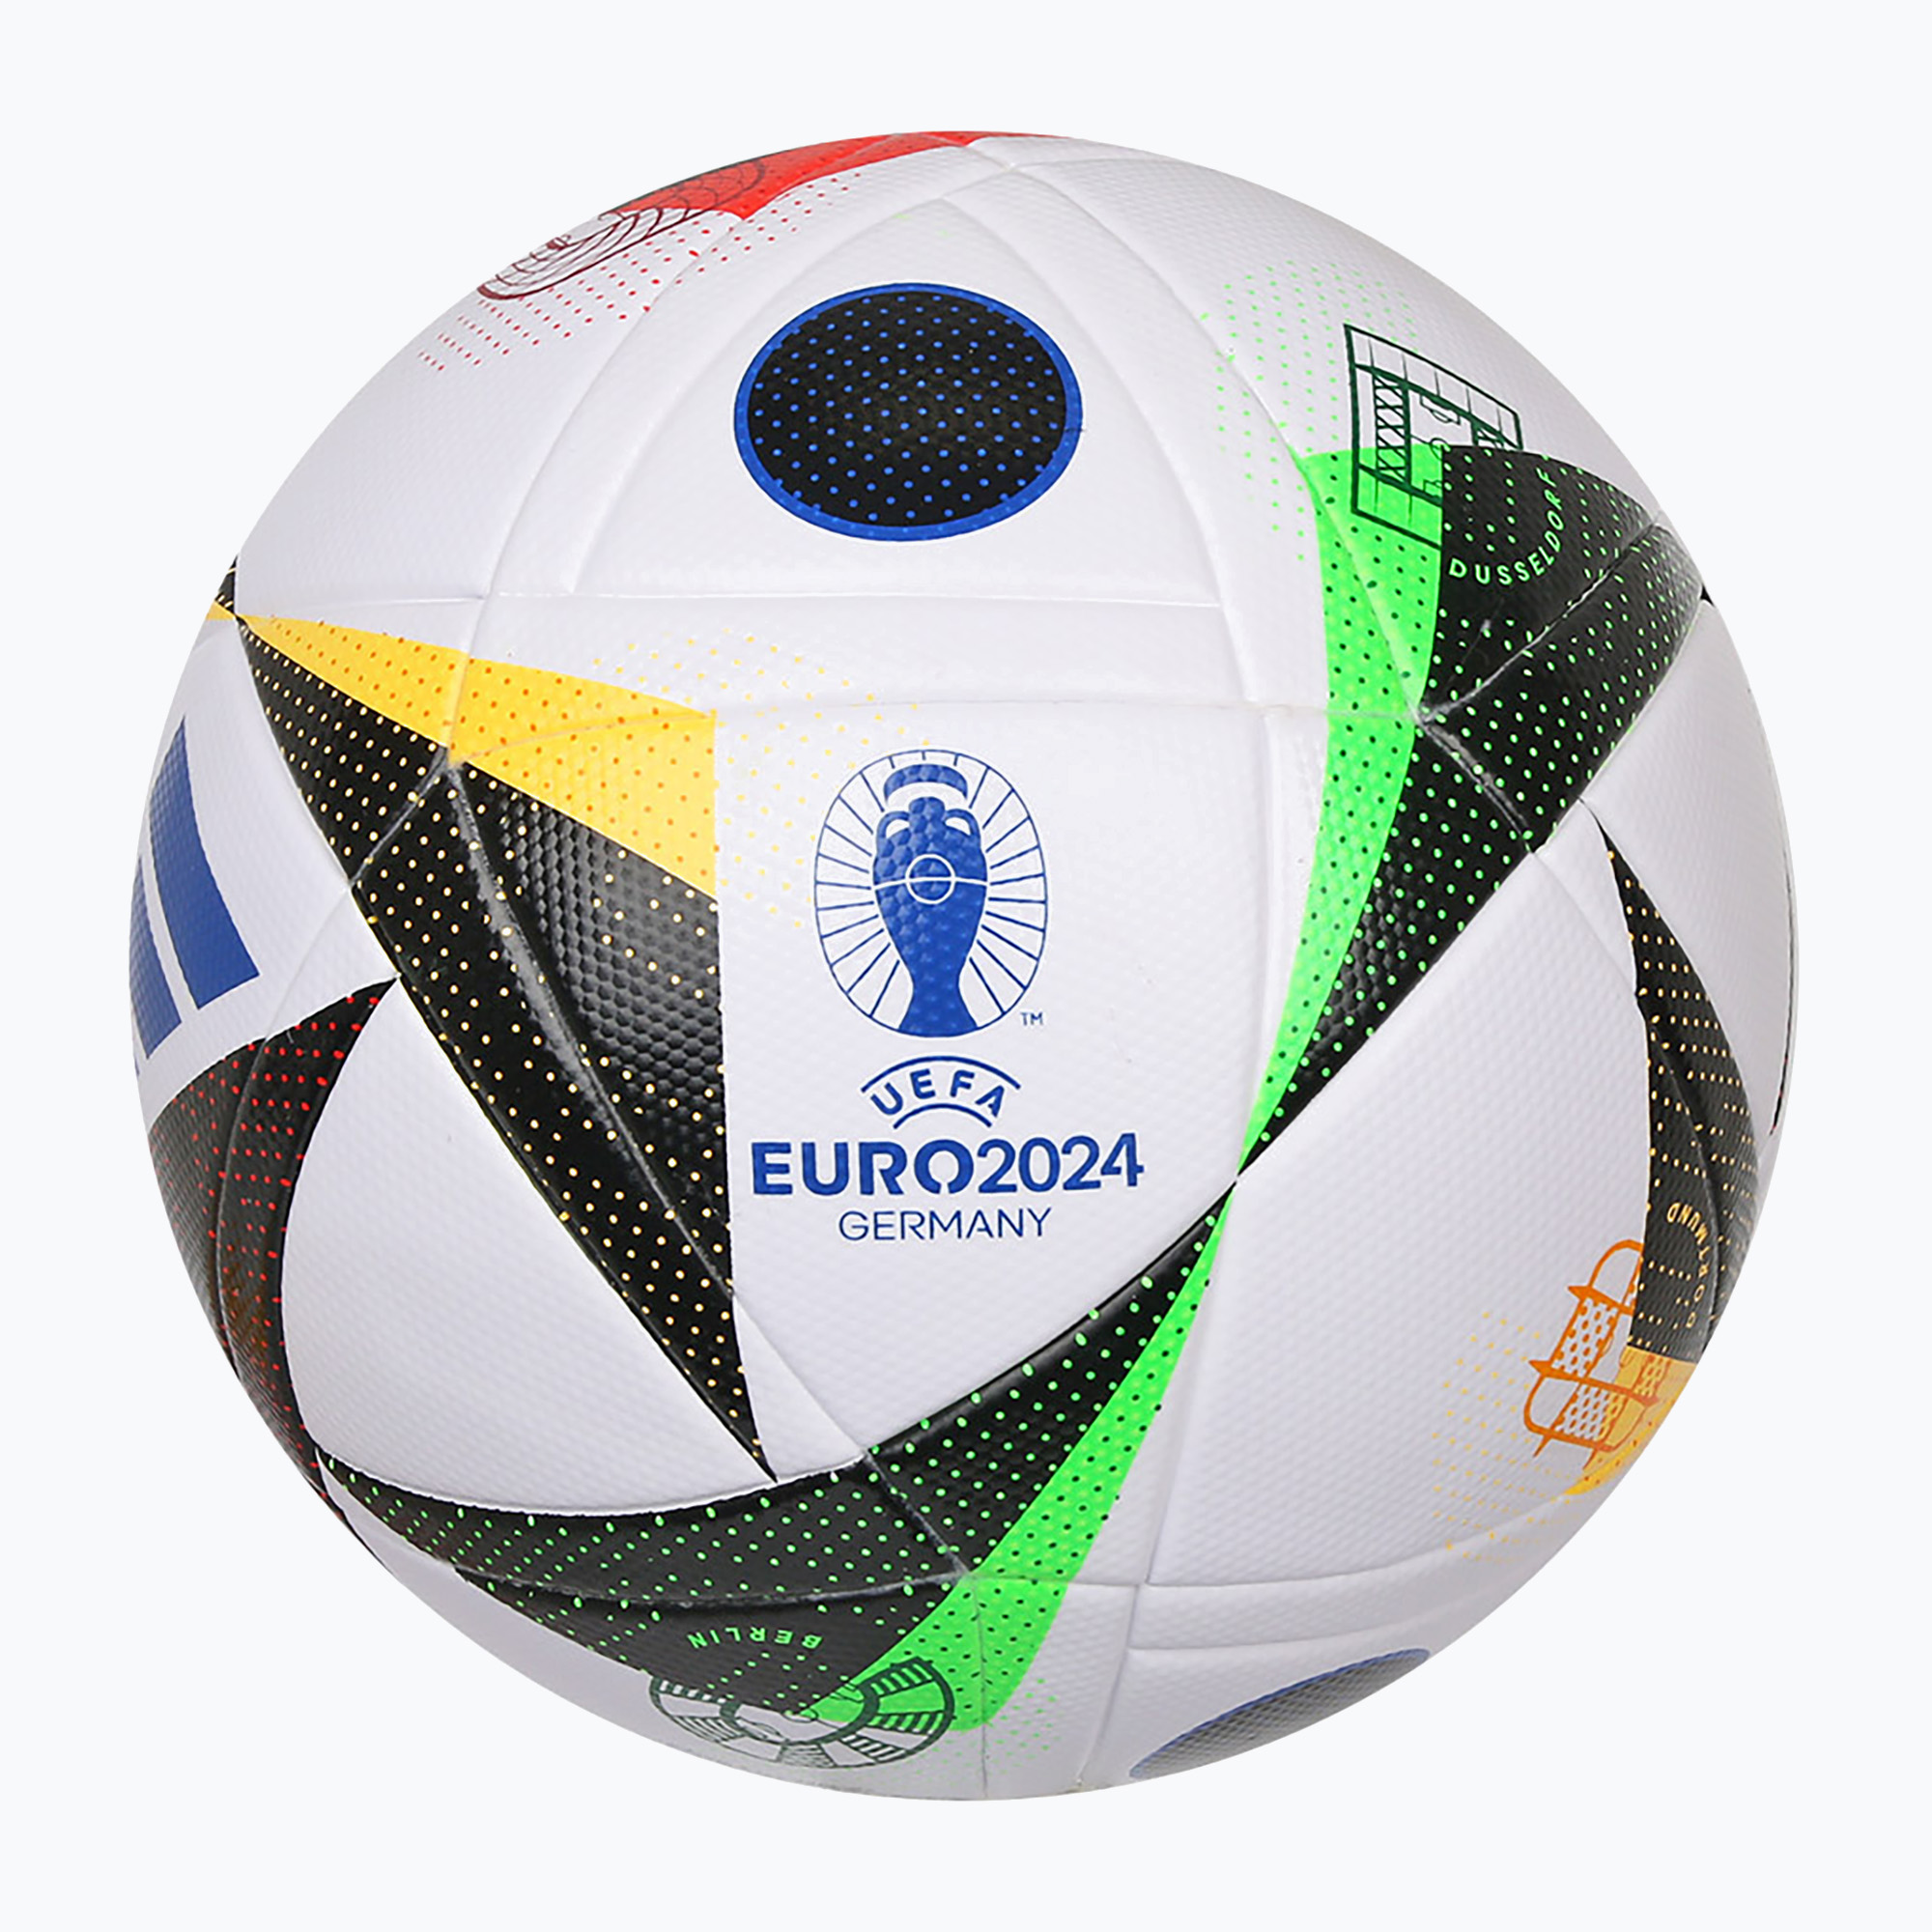 Futbalová lopta adidas Fussballliebe 2024 League Box white/black/glow blue veľkosť 5 futbal